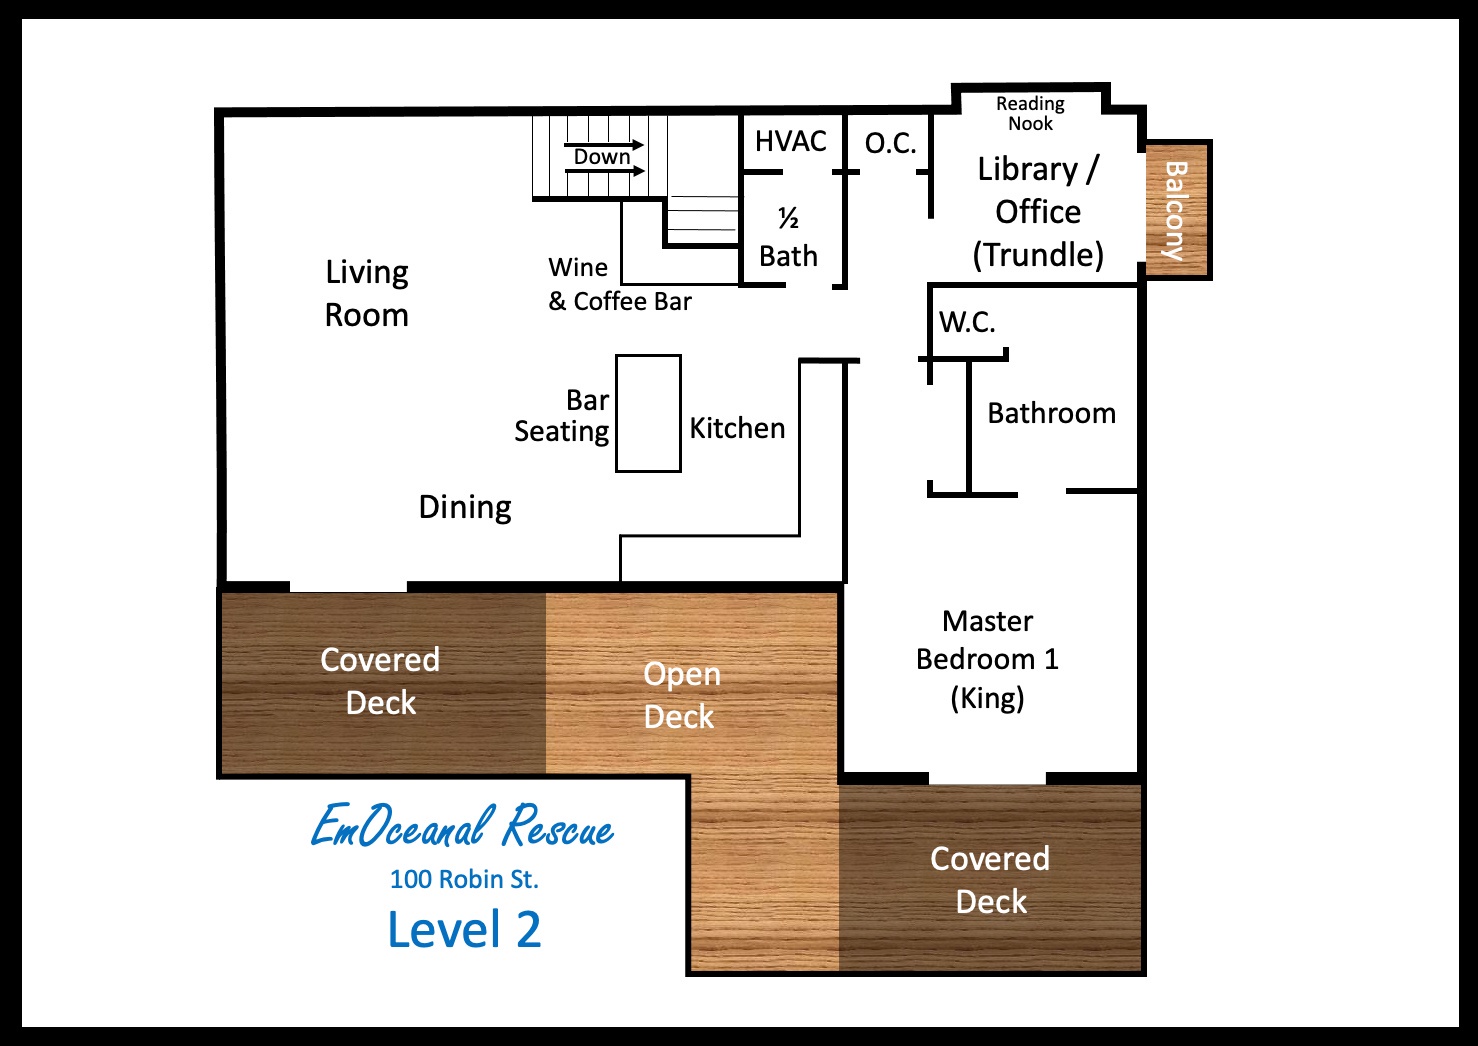 EmOceanal Rescue Floor Plan - 2nd Level